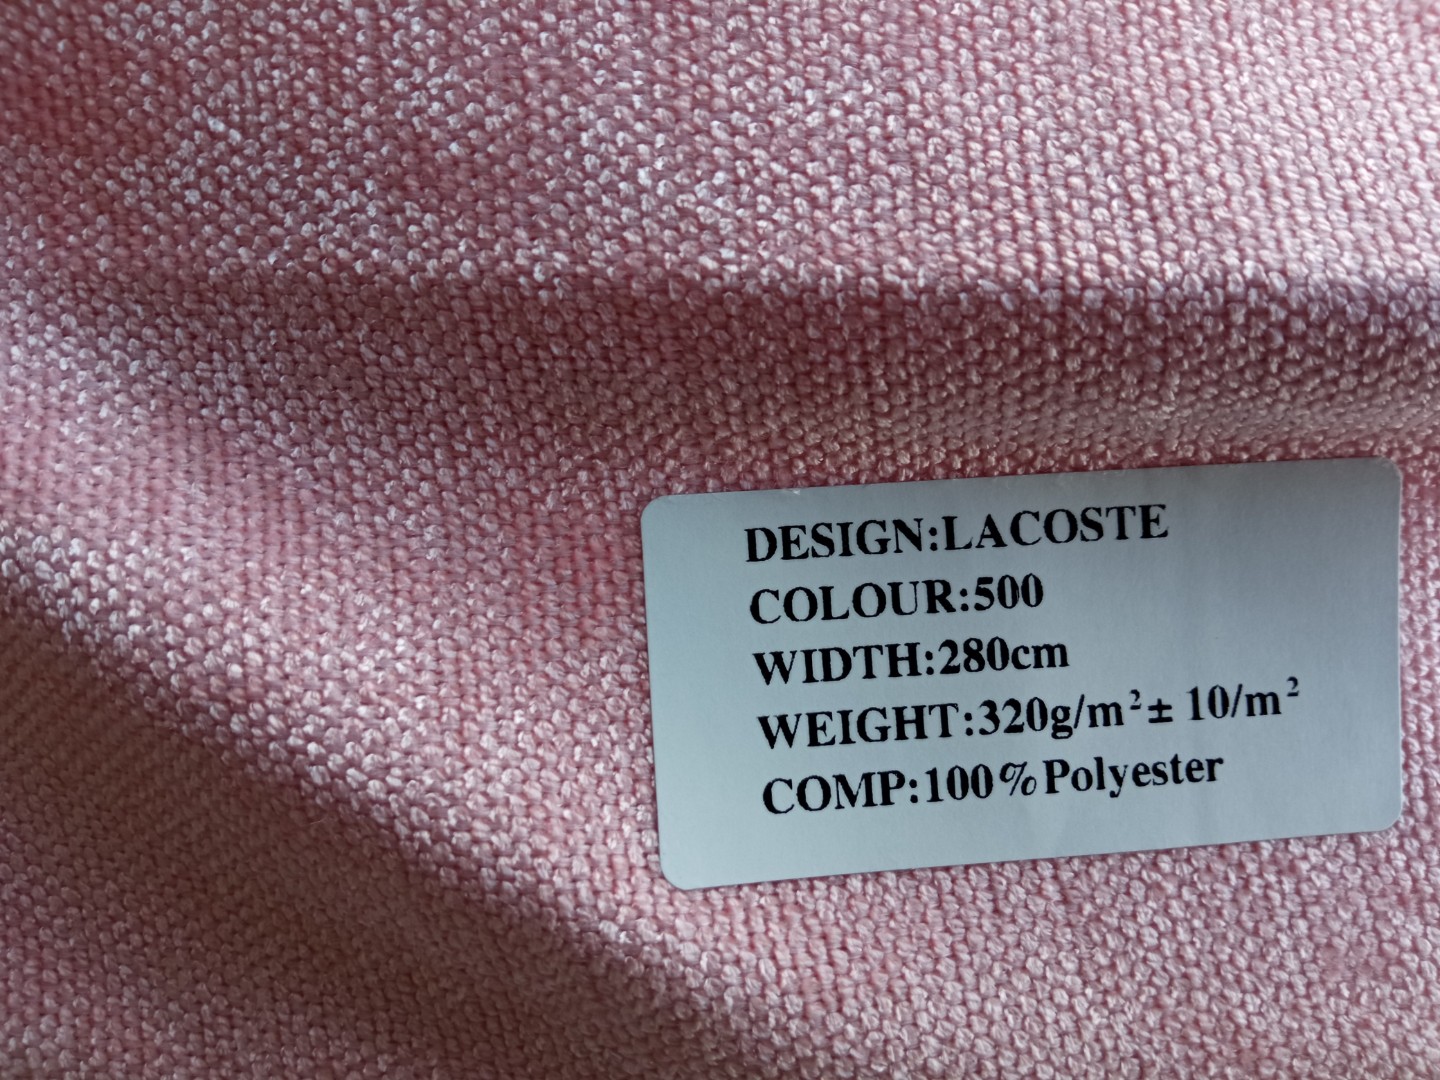 Описание характеристик ткани Lacoste: особенности использования